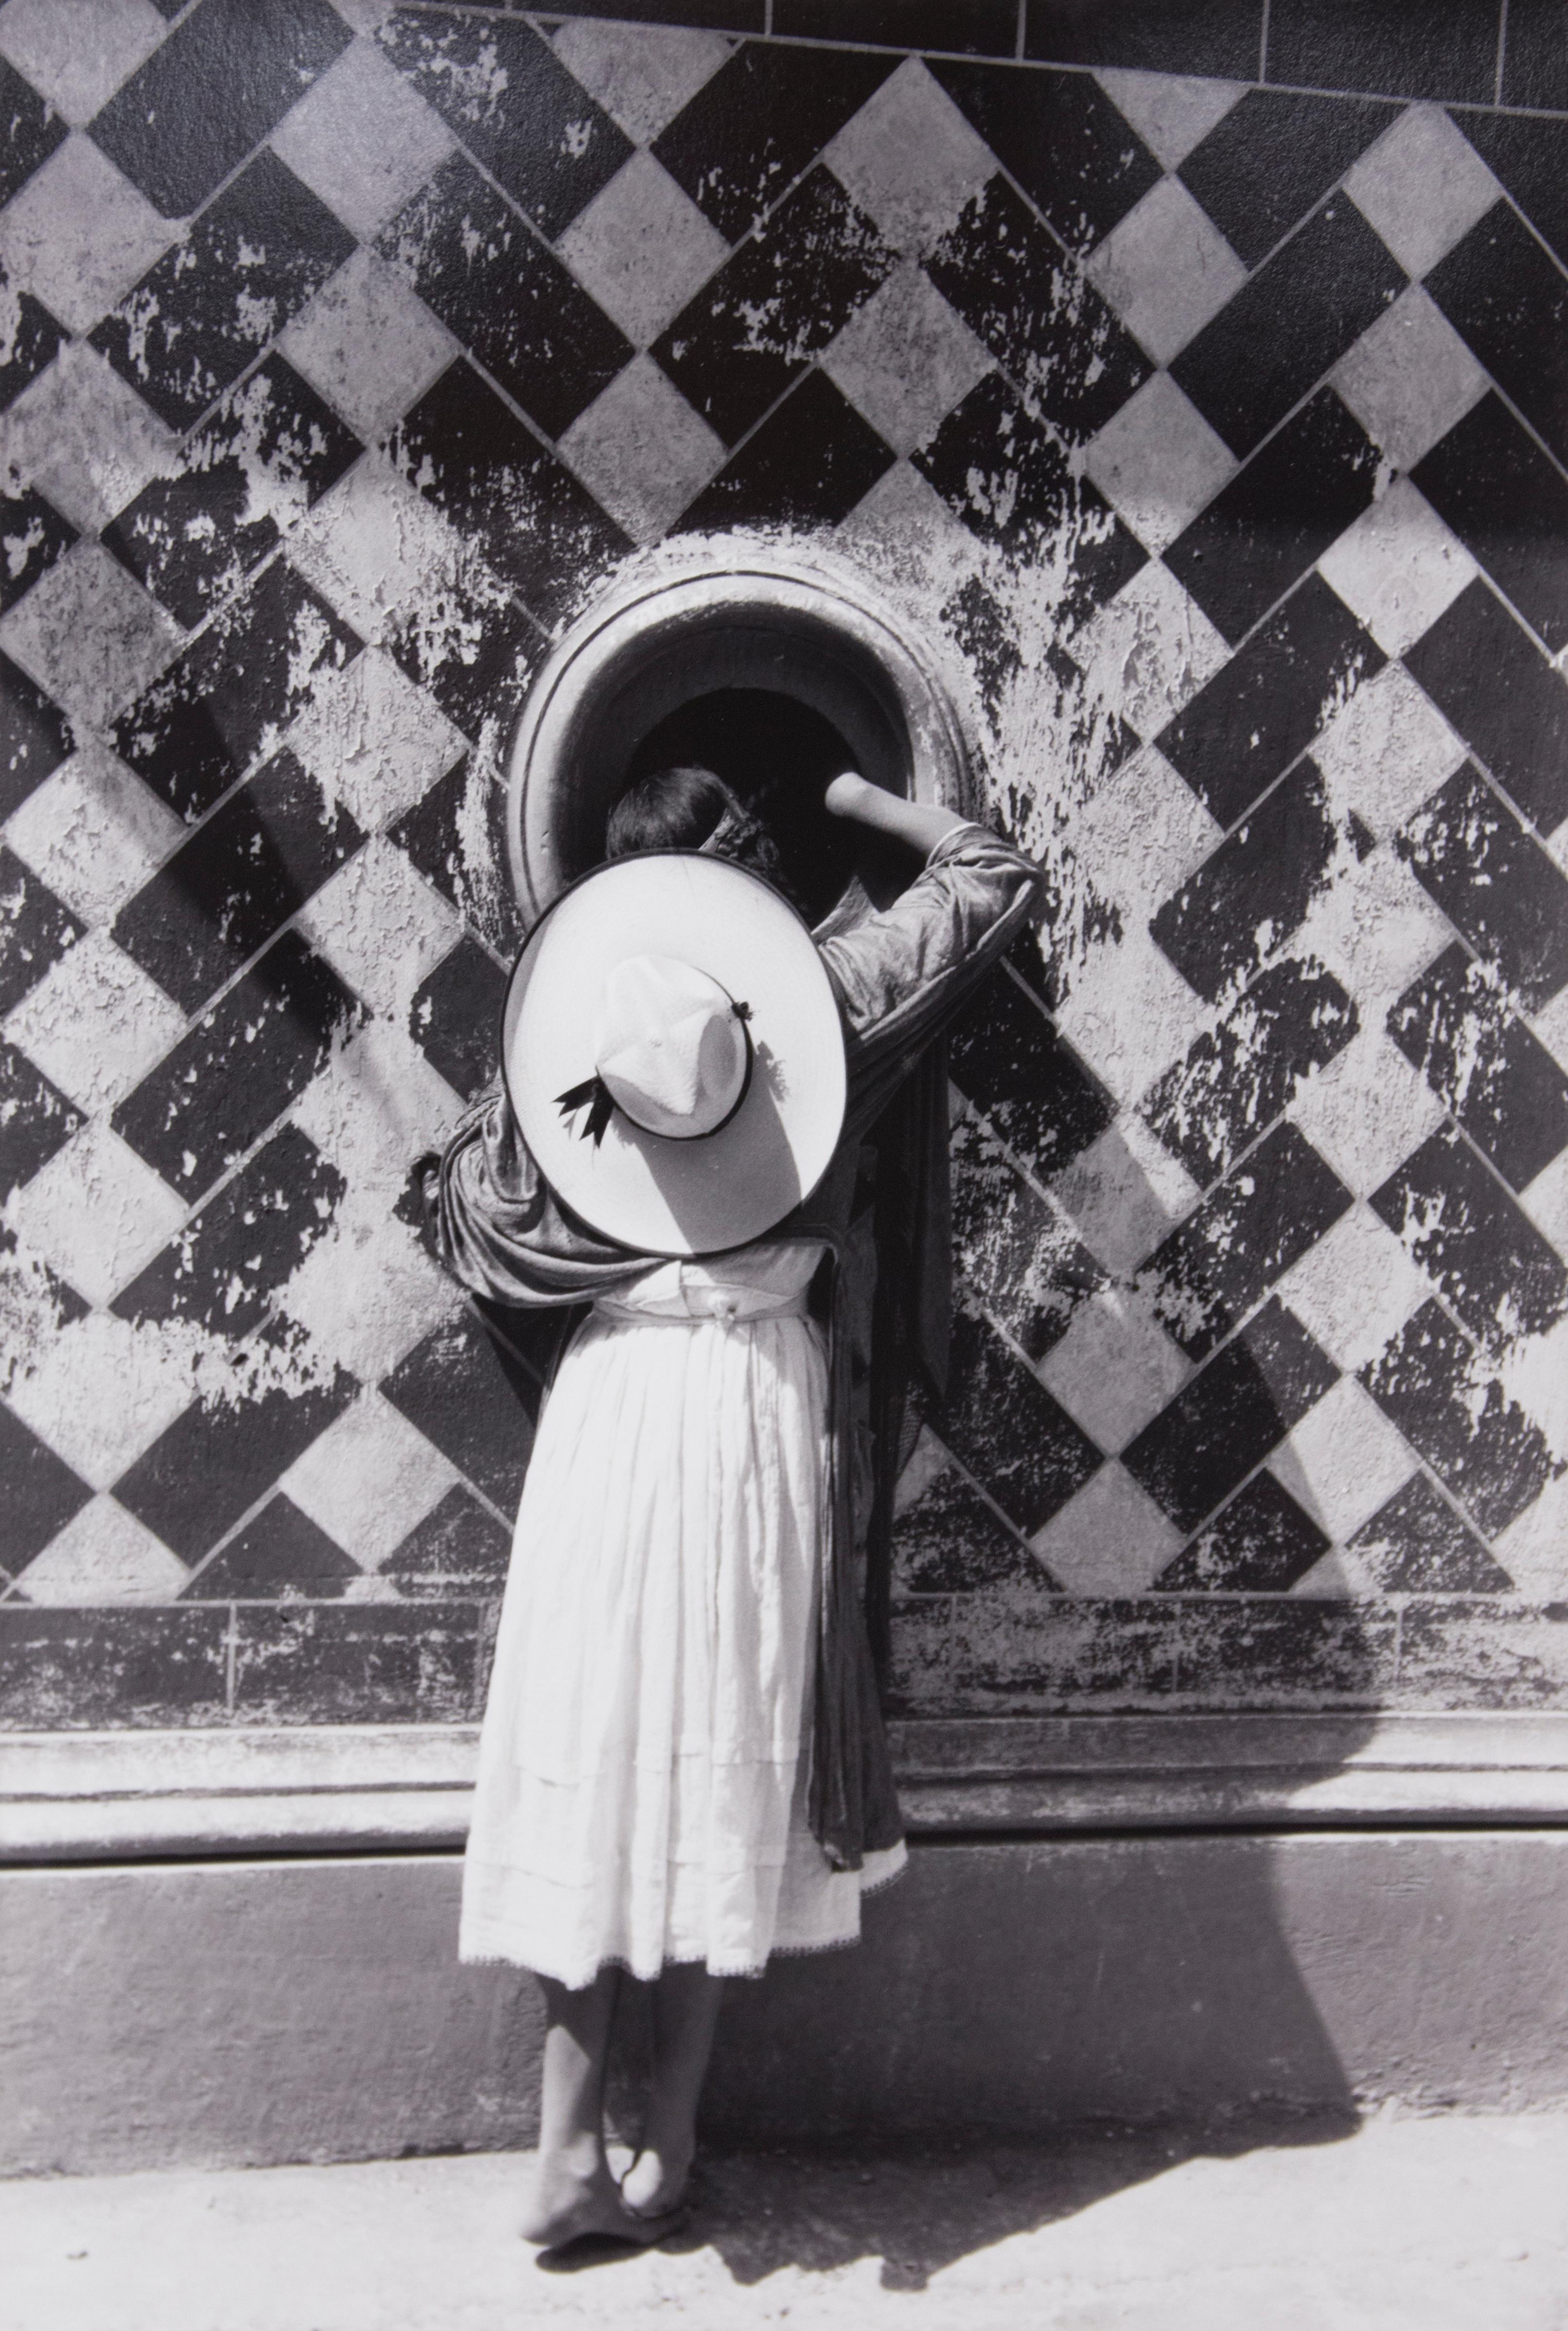 La Hija de los Danzantes (The Daughter of the Dancers), 1933 - Alvarez Bravo - Photograph by Manuel Alvarez Bravo